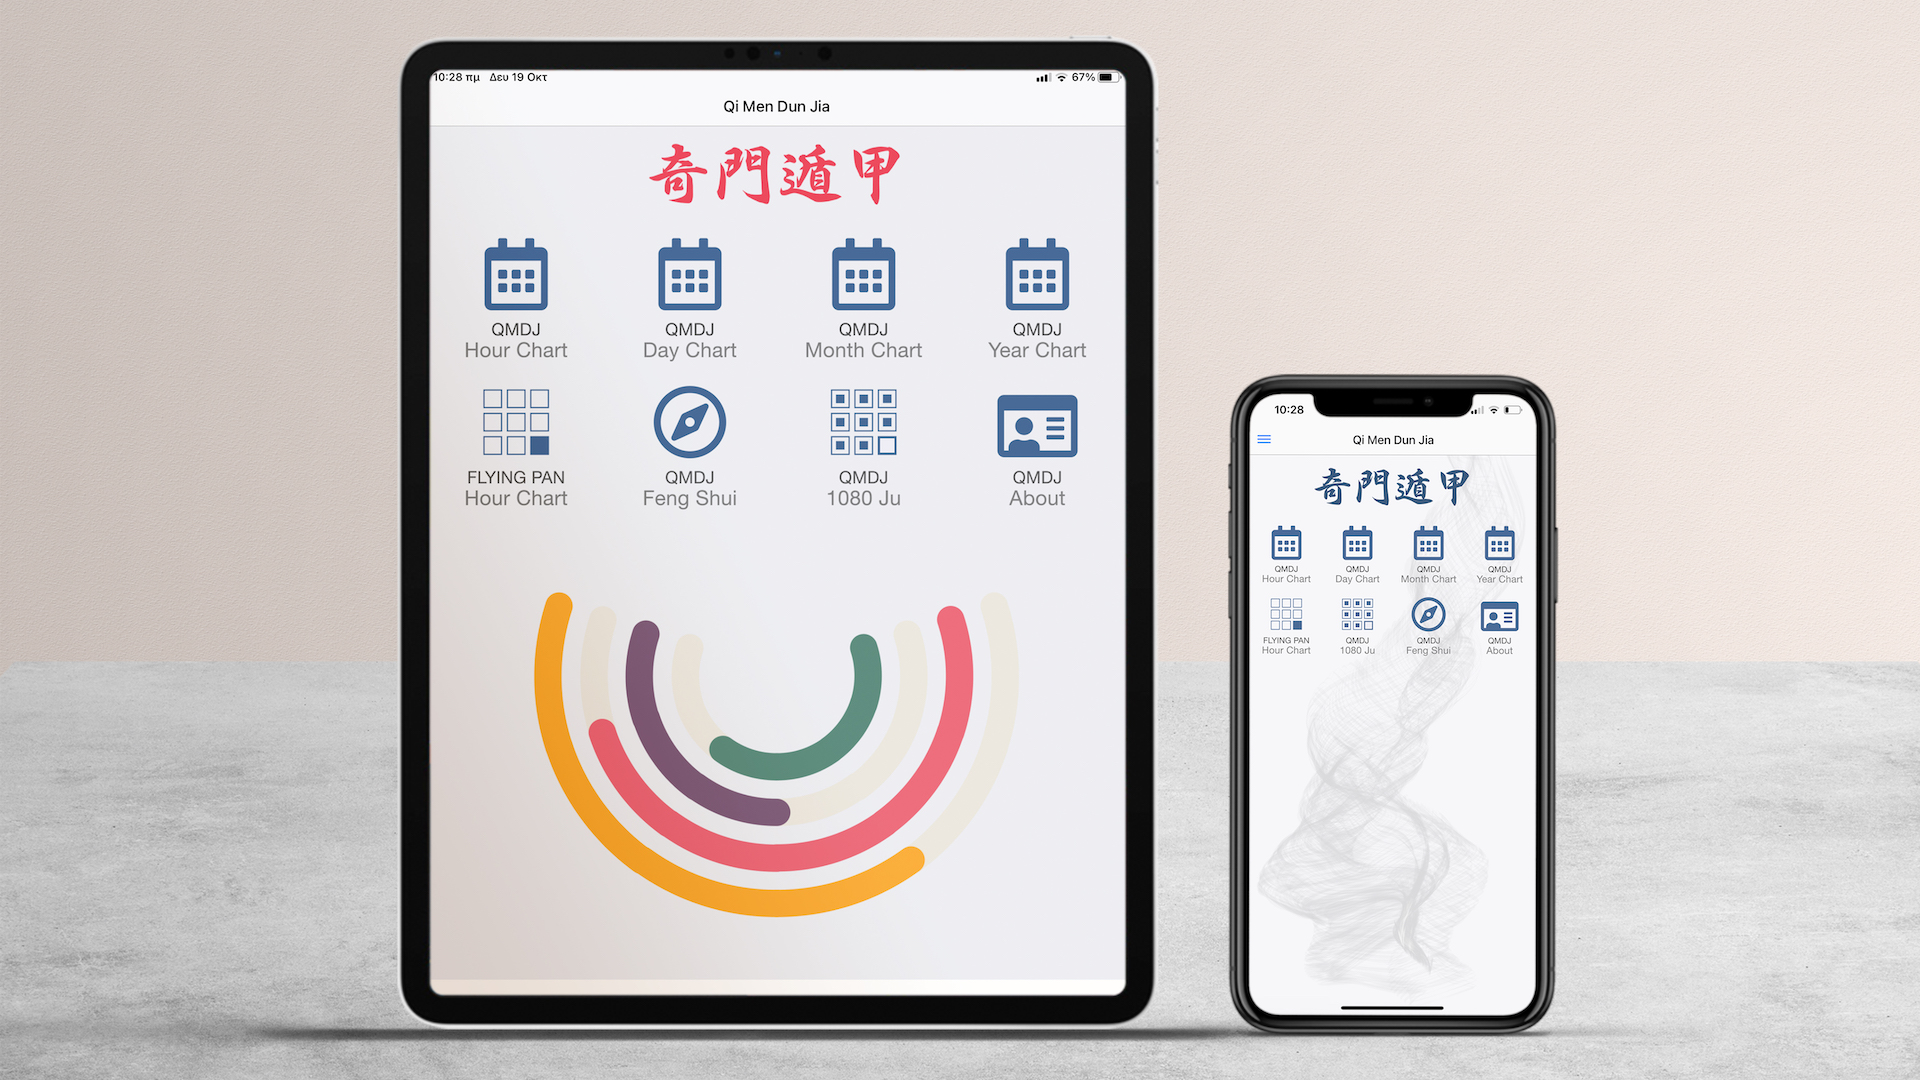 Qi Men Dun Jia 1080Ju App for iPhone and iPad